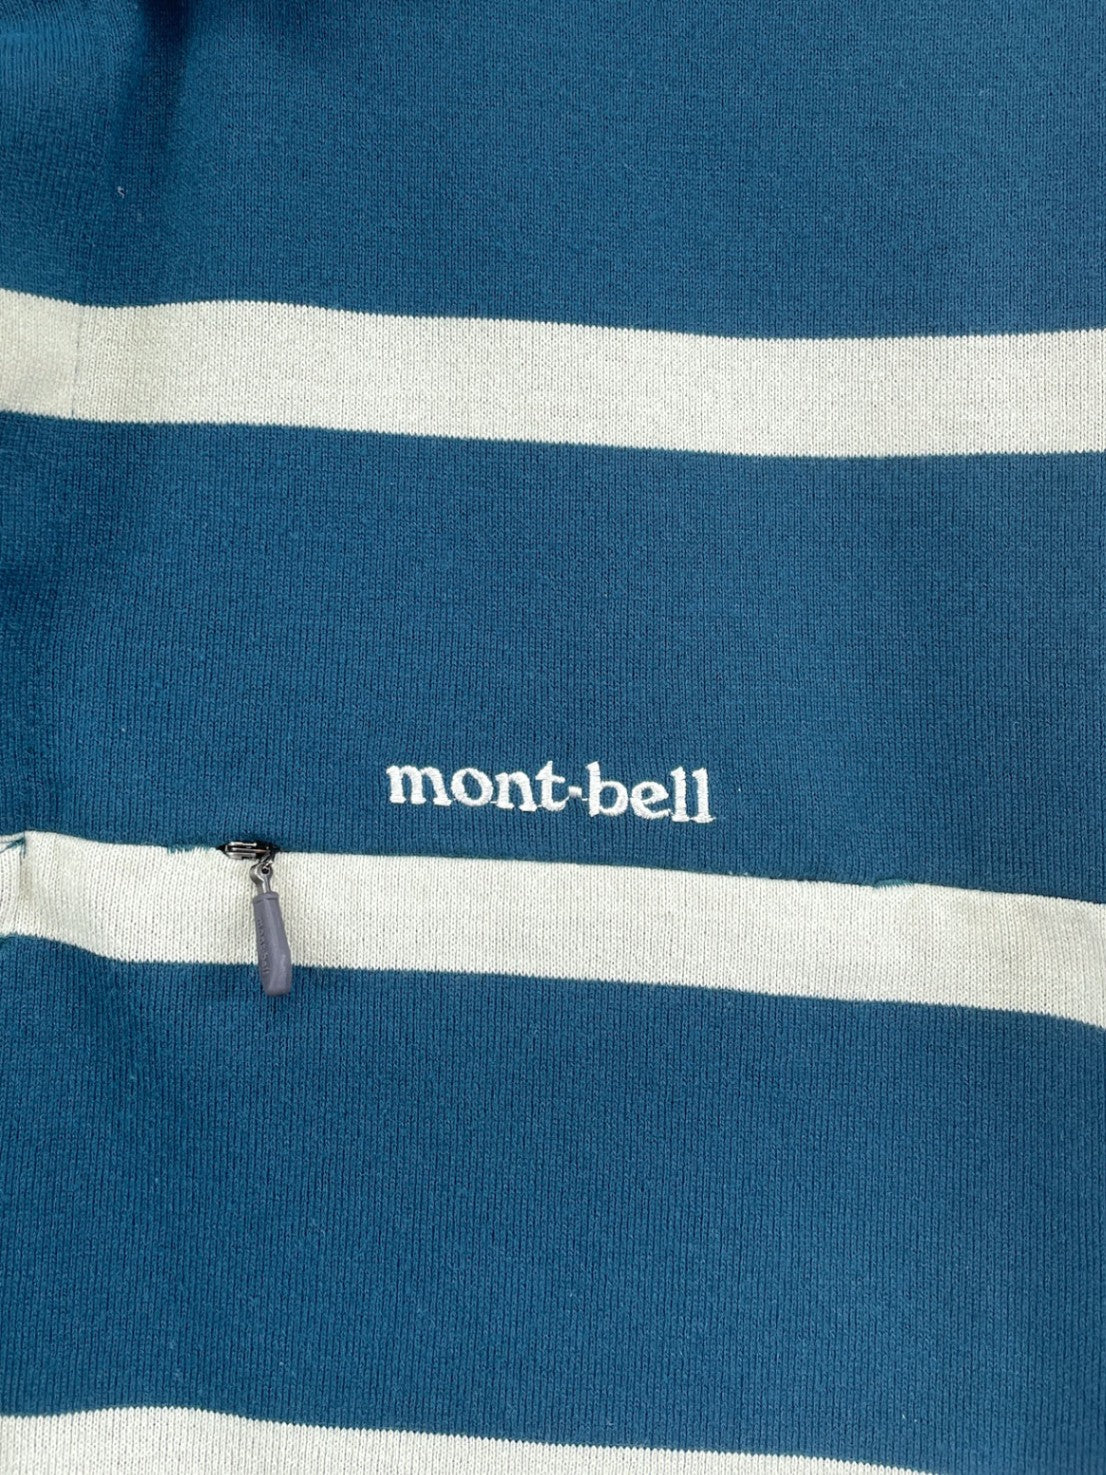 mont-bell border polo shirt